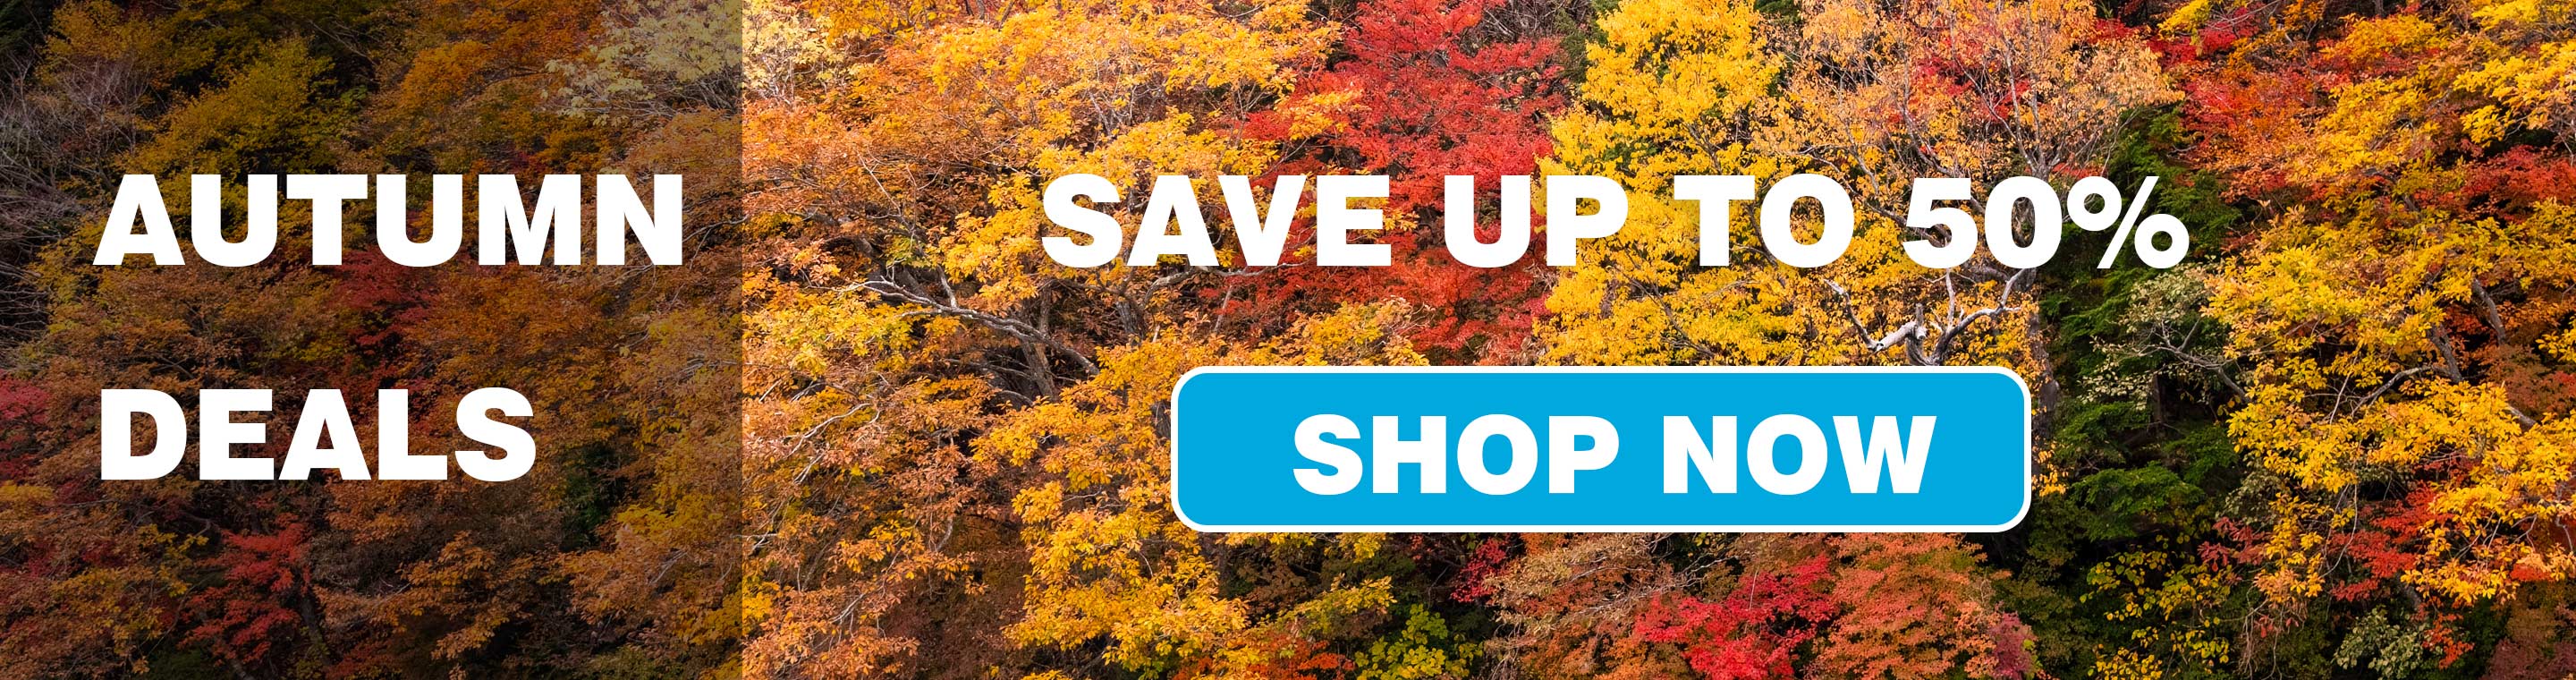 Autumn Deals - Save Up to 50% - Shop Now